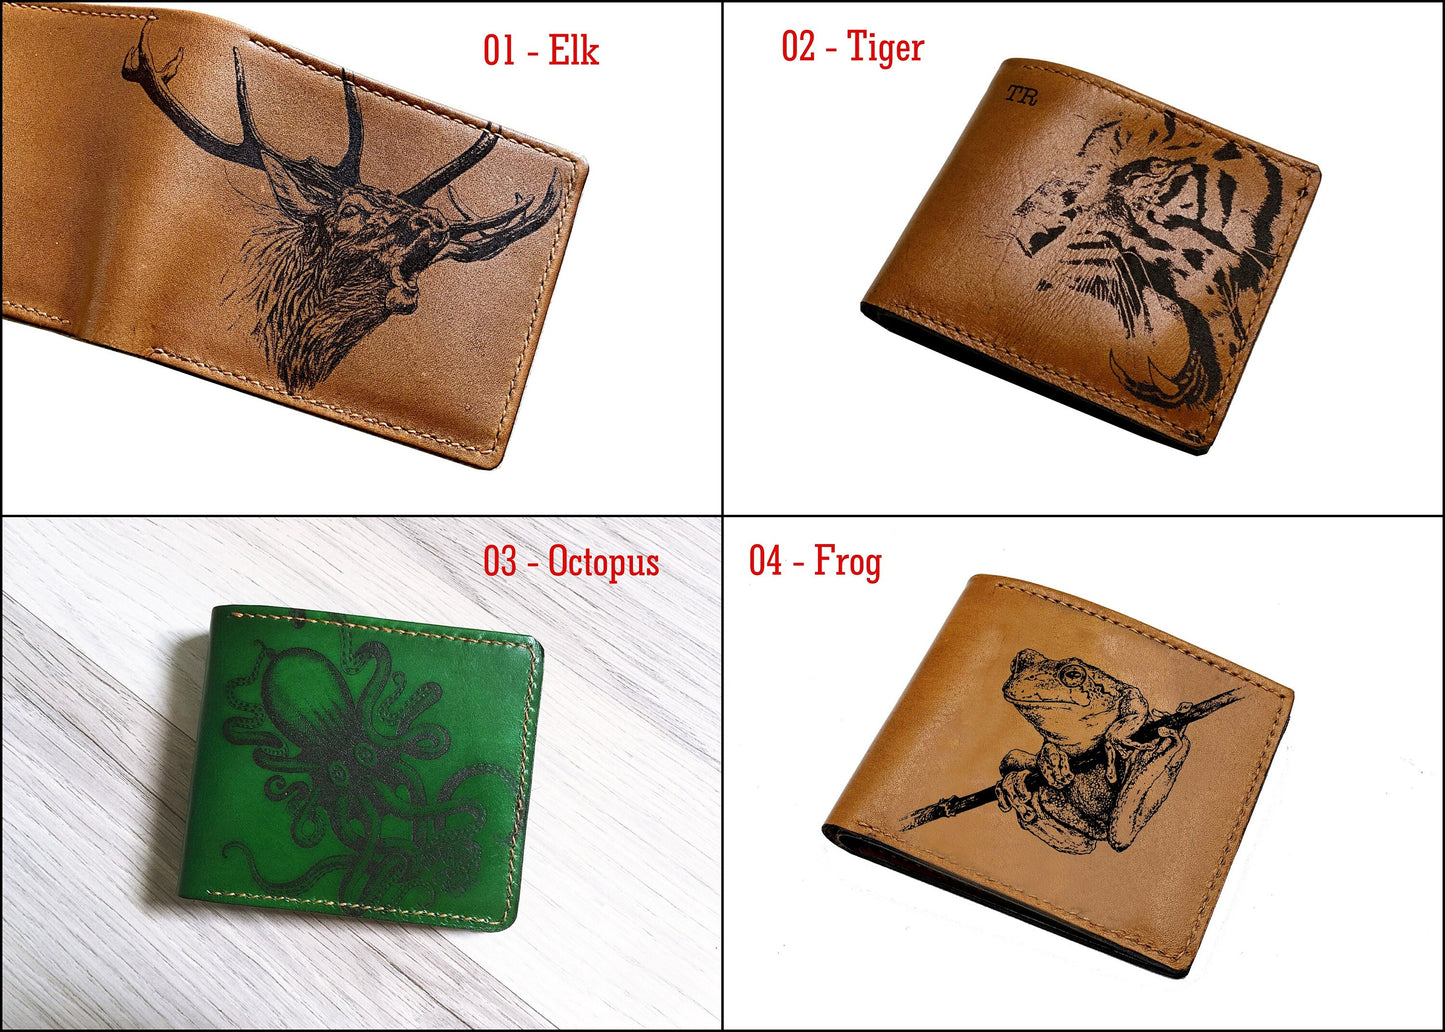 Frog drawing pattern leather men's wallet, customized engraving wallet for men, animal pattern wallet, gift for men, amphibians pattern gift